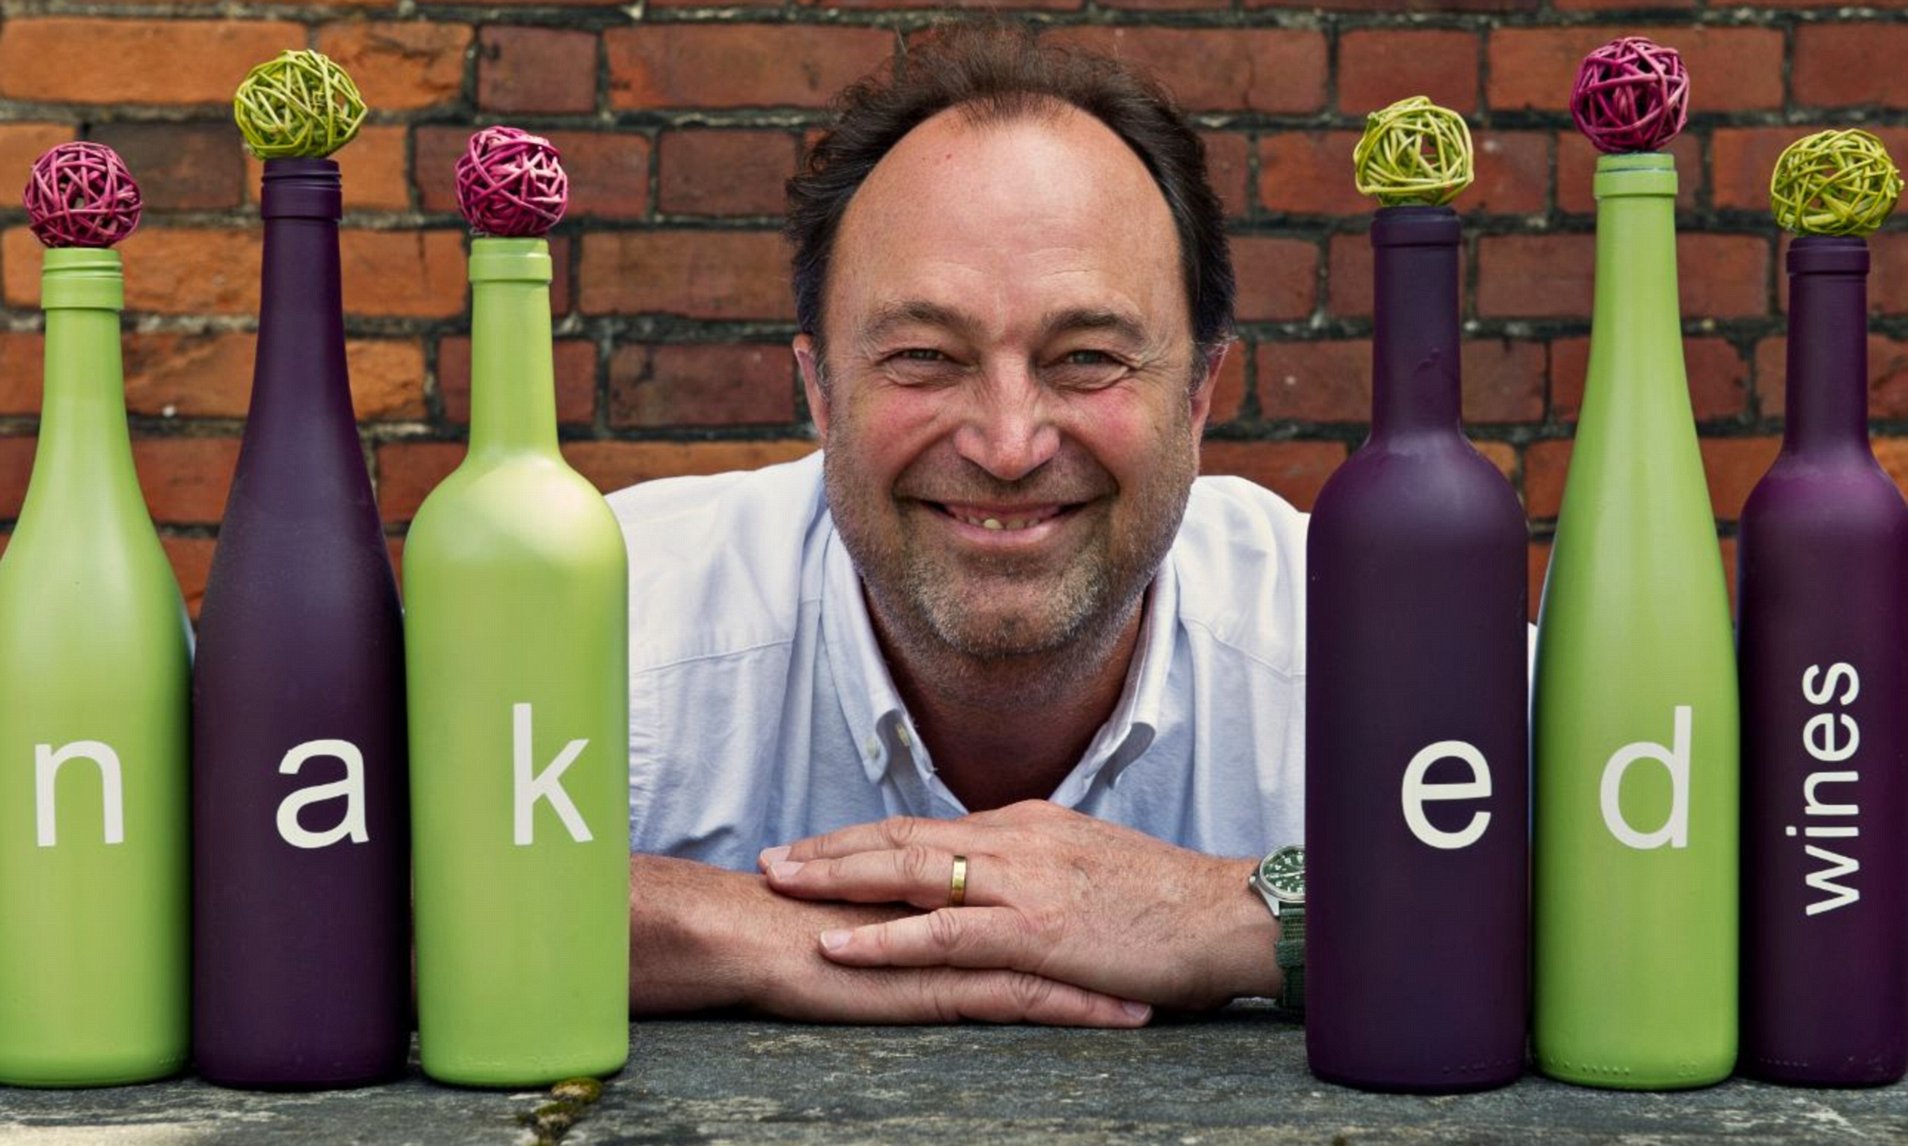 Rowan Gormley, founder of Nake Wines, in front of marketing wine bottles